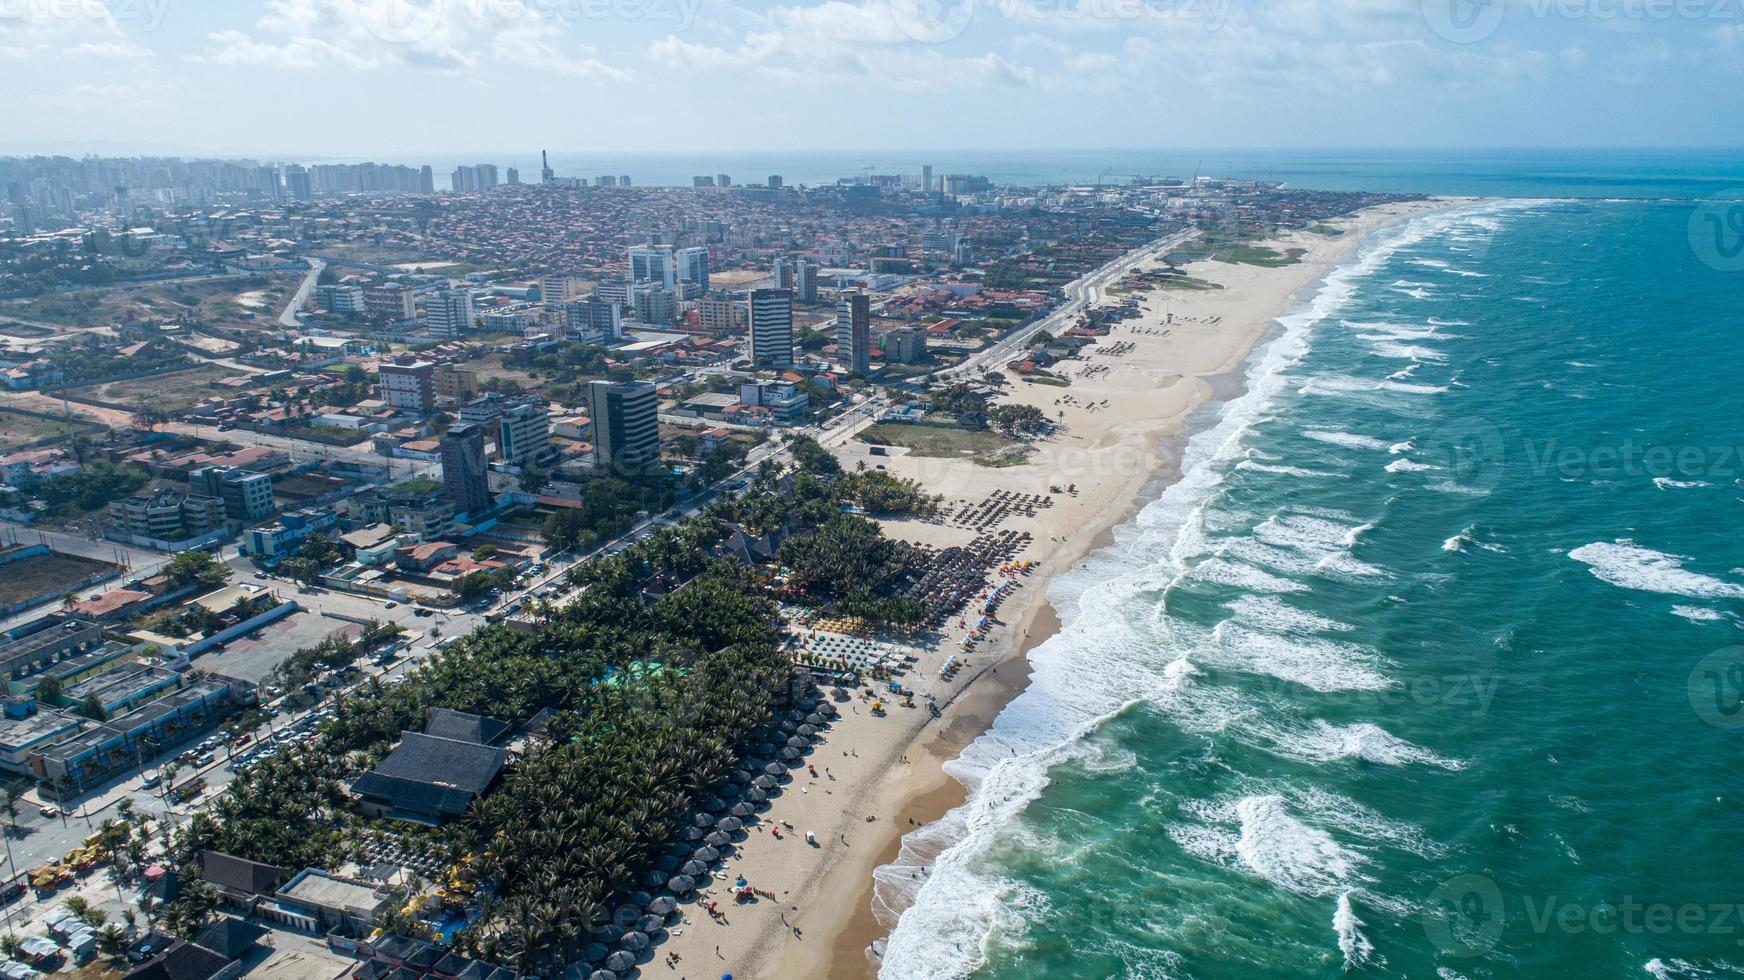 luchtfoto van praia do futuro tropisch strand. foto